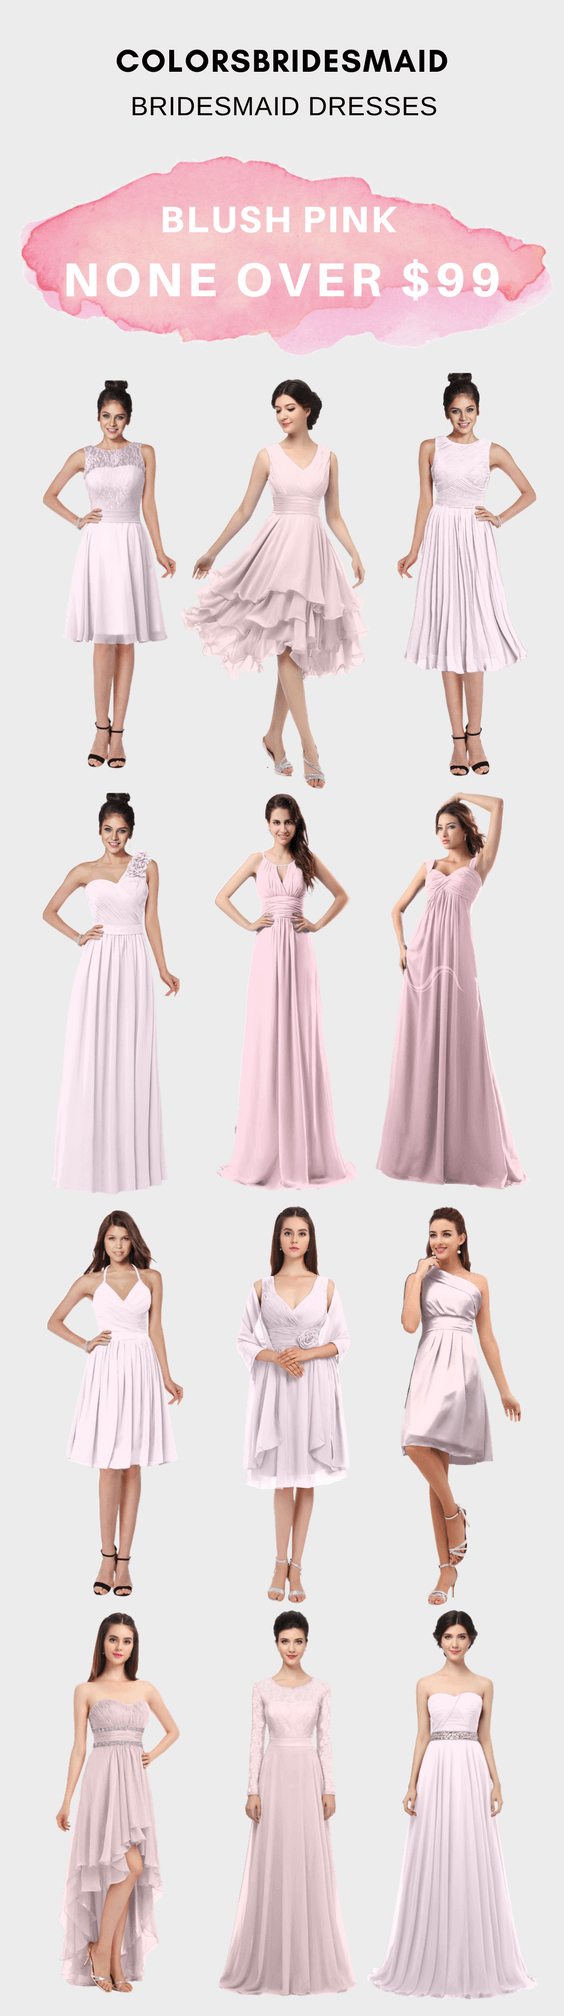 affordable blush pink bridesmaid dresses short and long under 100